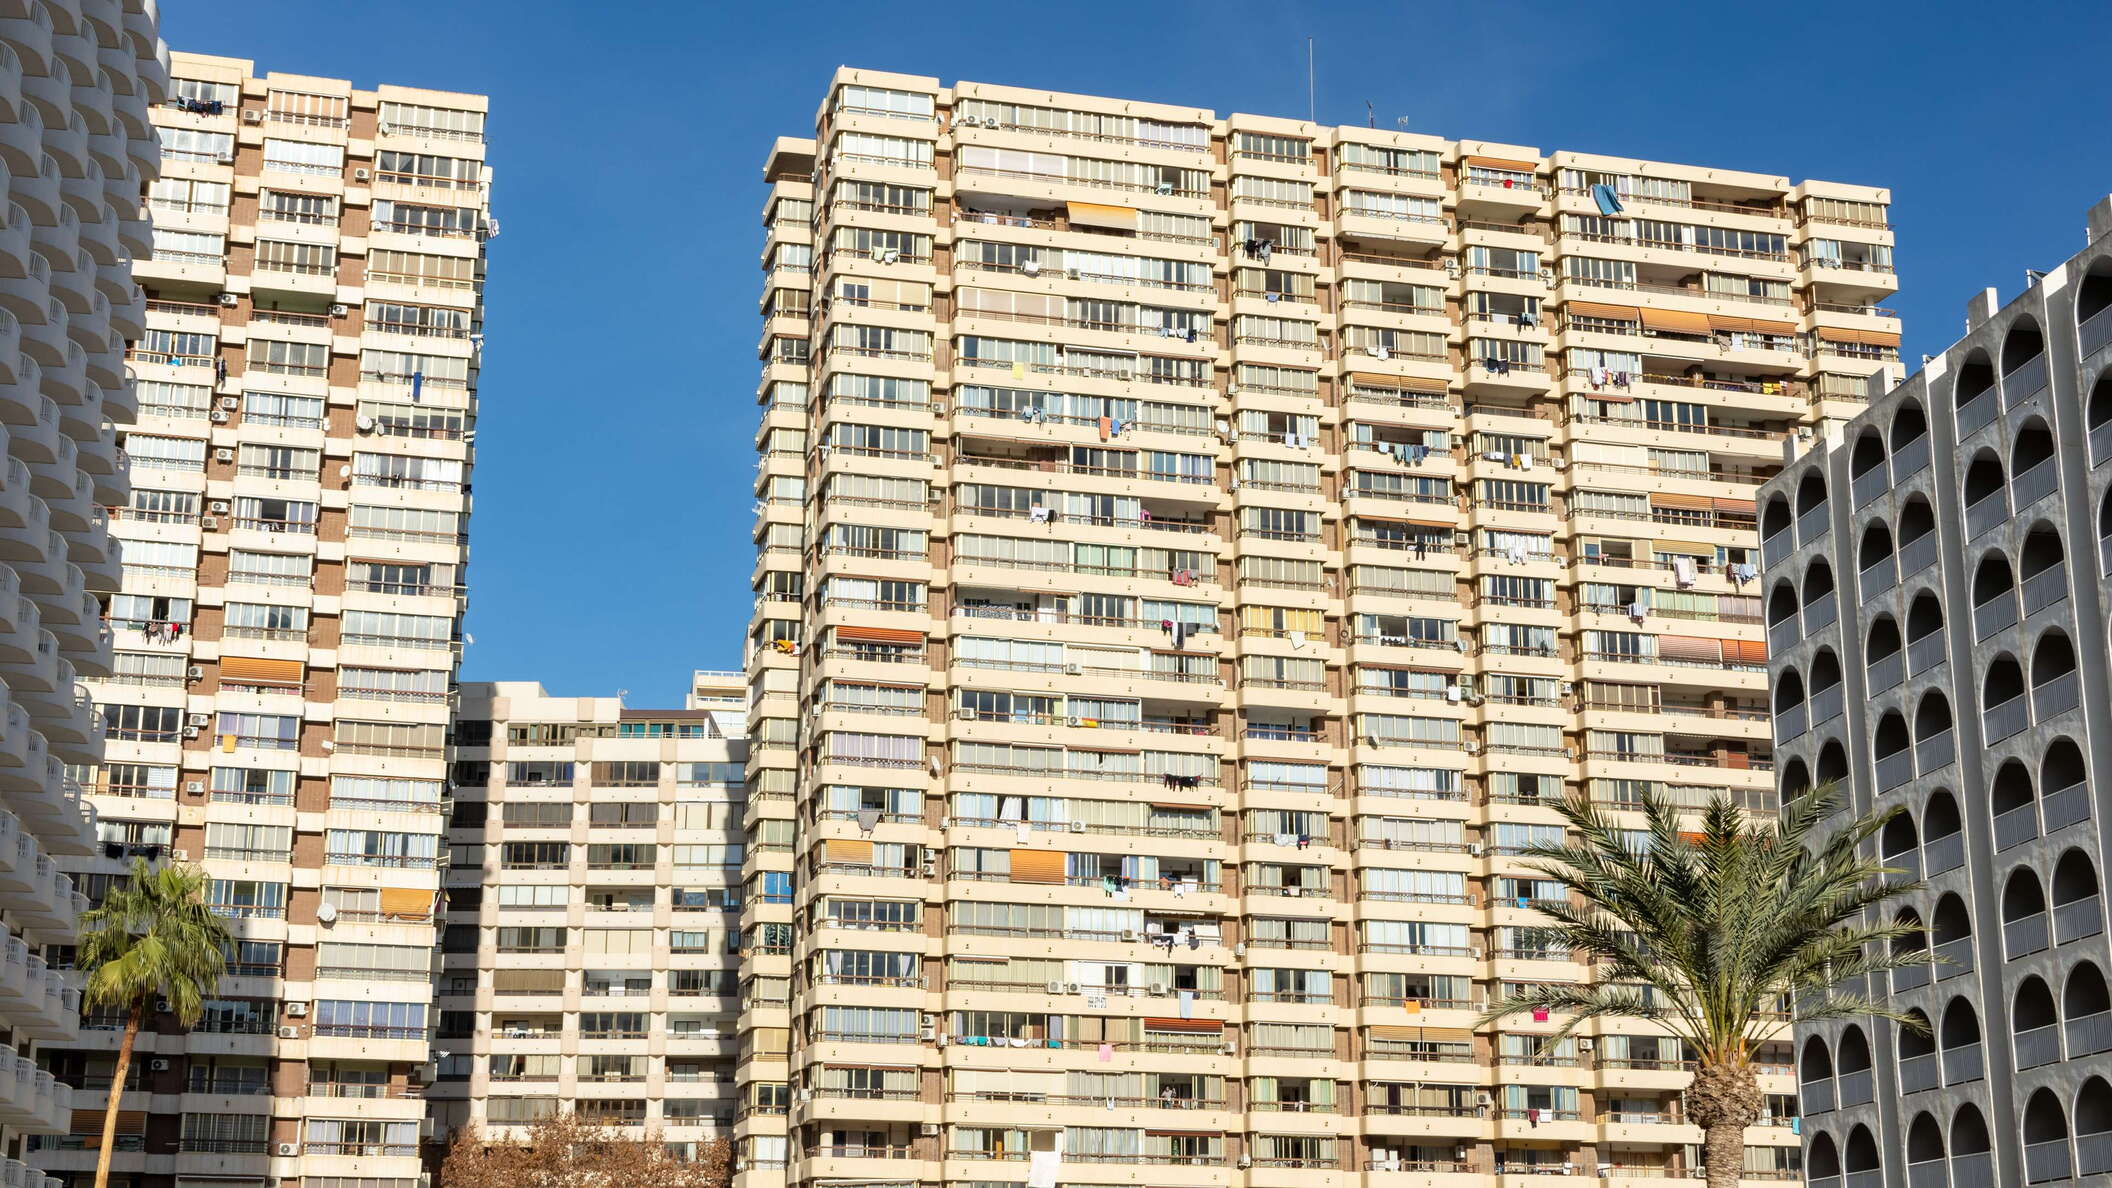 Benidorm | Apartment buildings